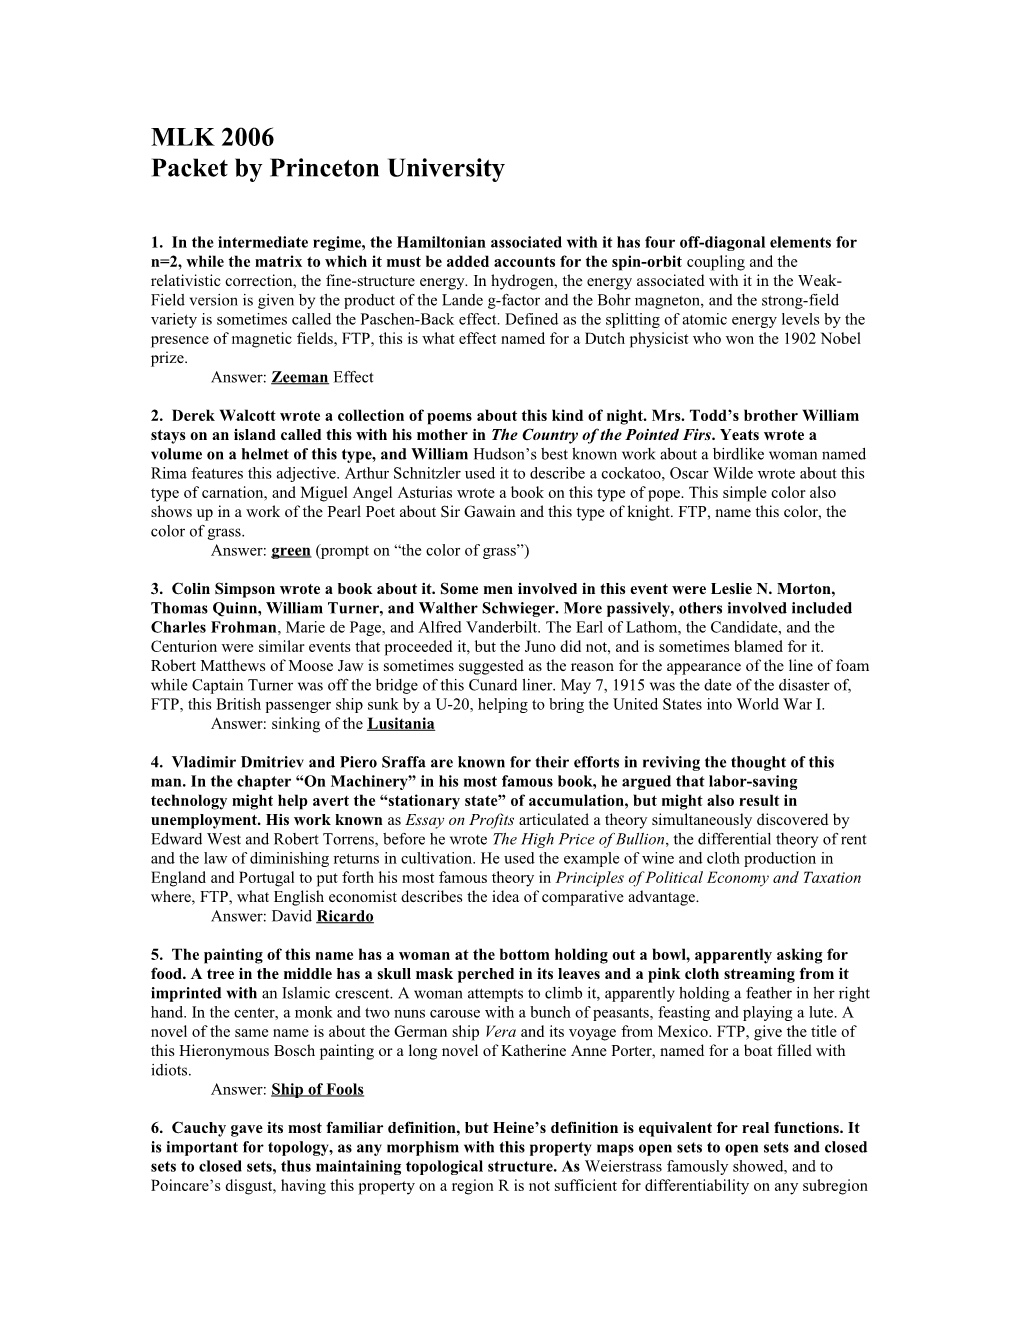 Packet by Princetonuniversity